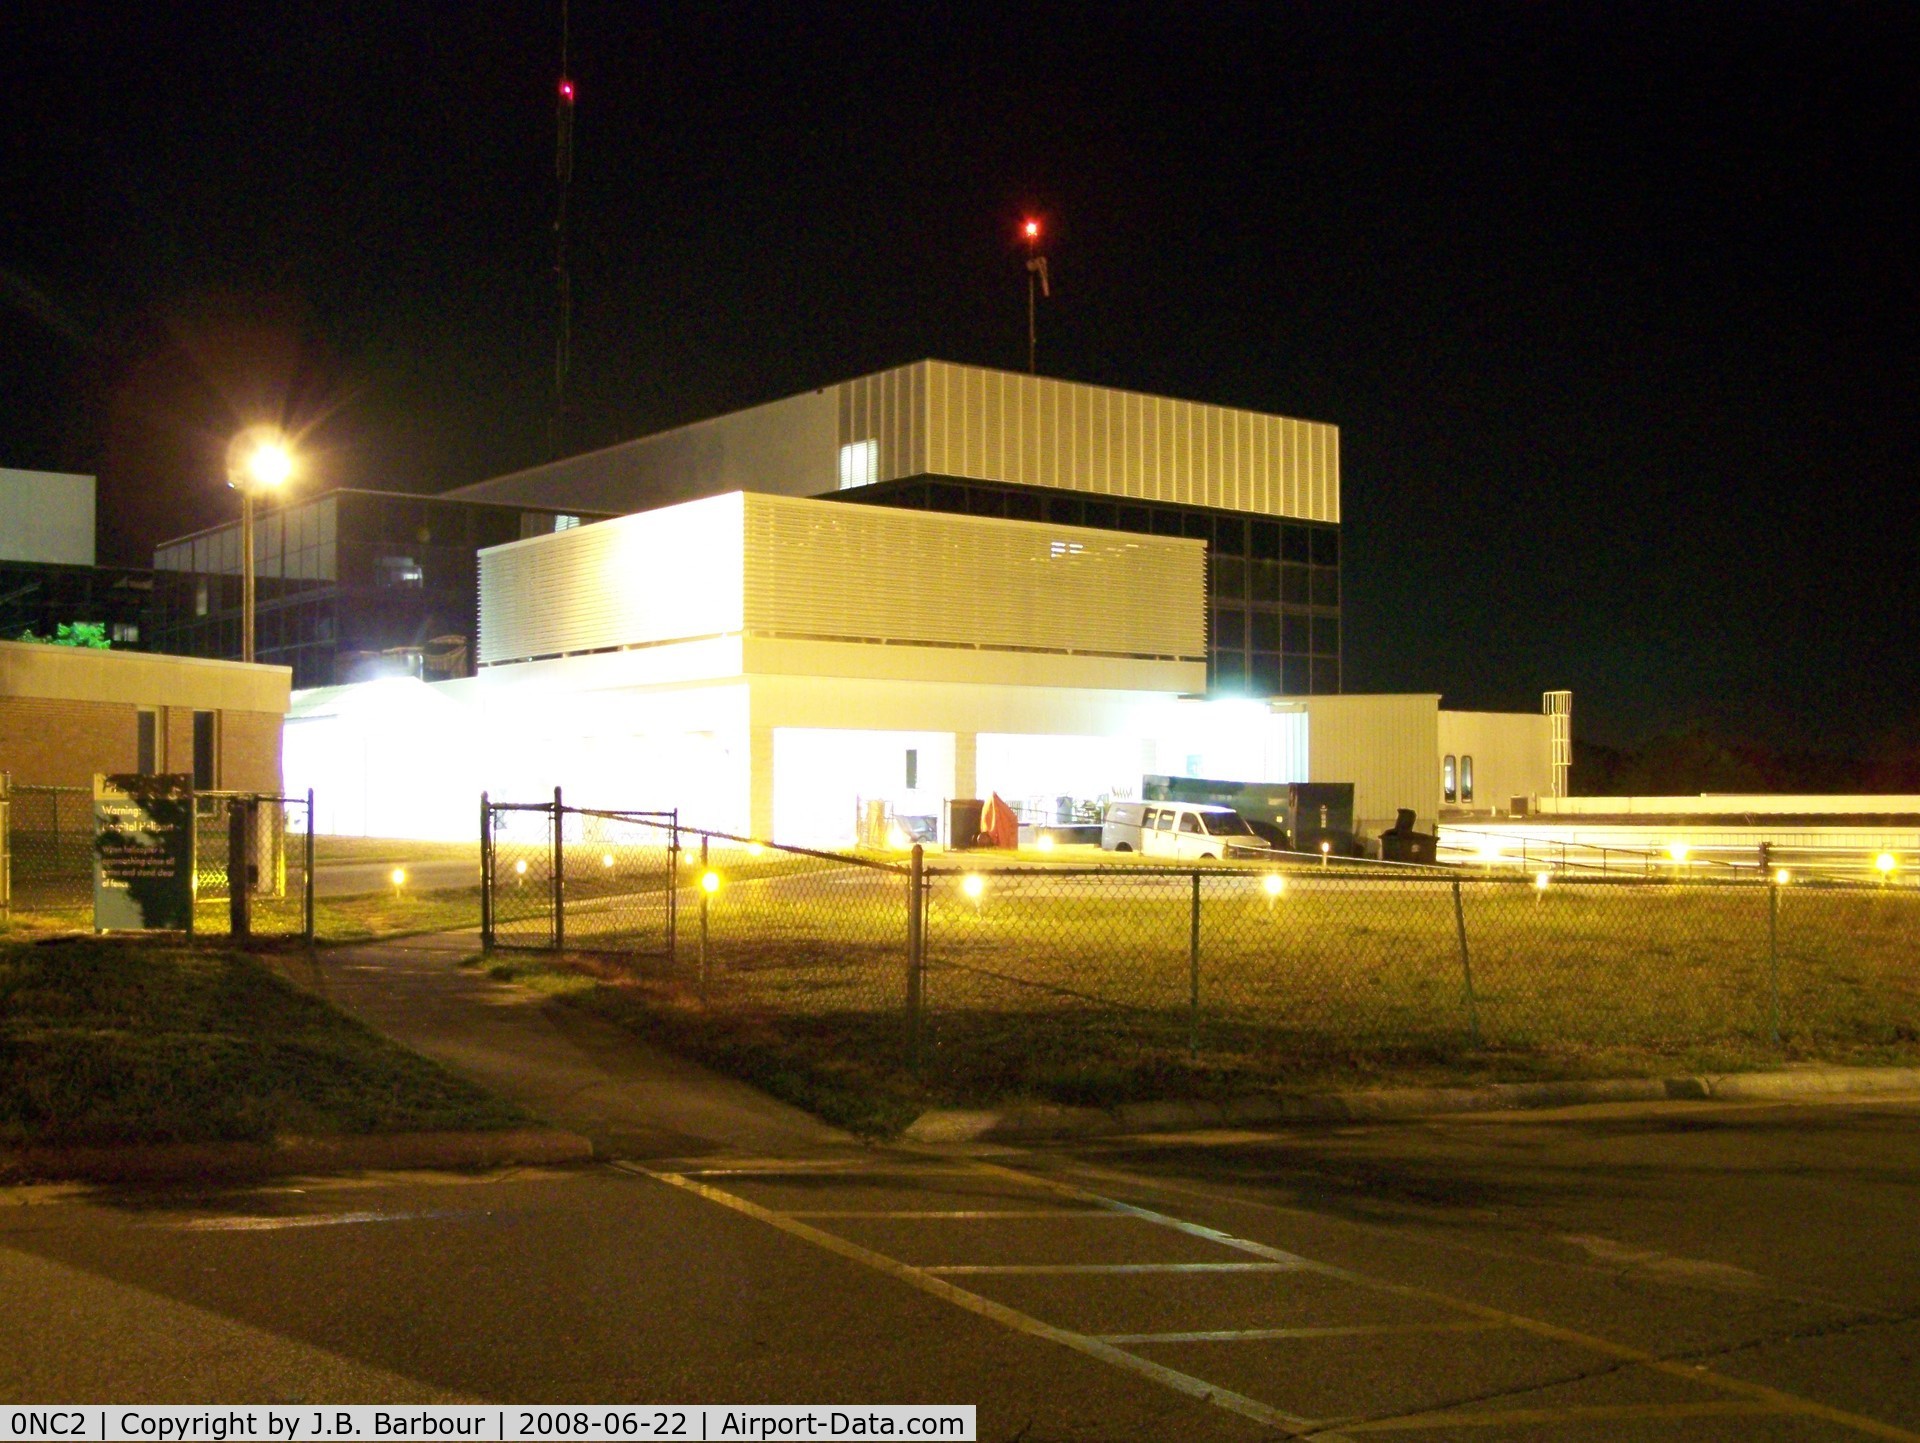 Moore Regional Hospital Heliport (0NC2) - N/A